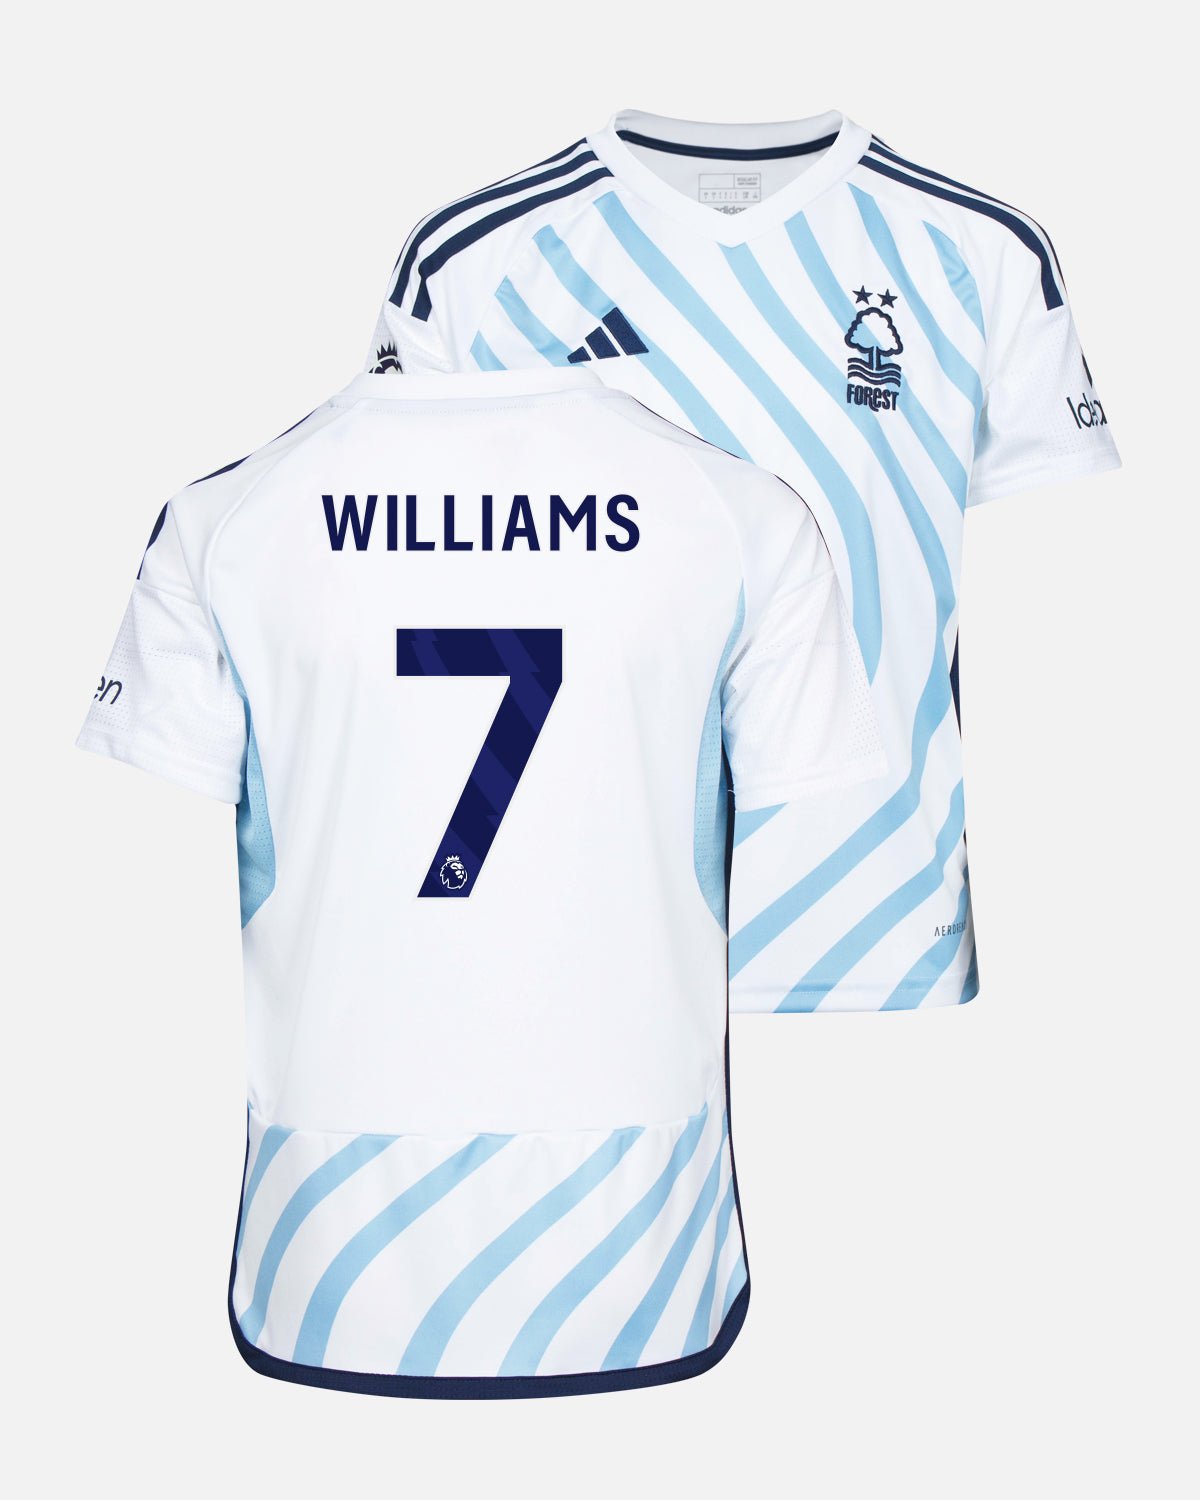 NFFC Junior Away Shirt 23-24 - Williams 7 - Nottingham Forest FC